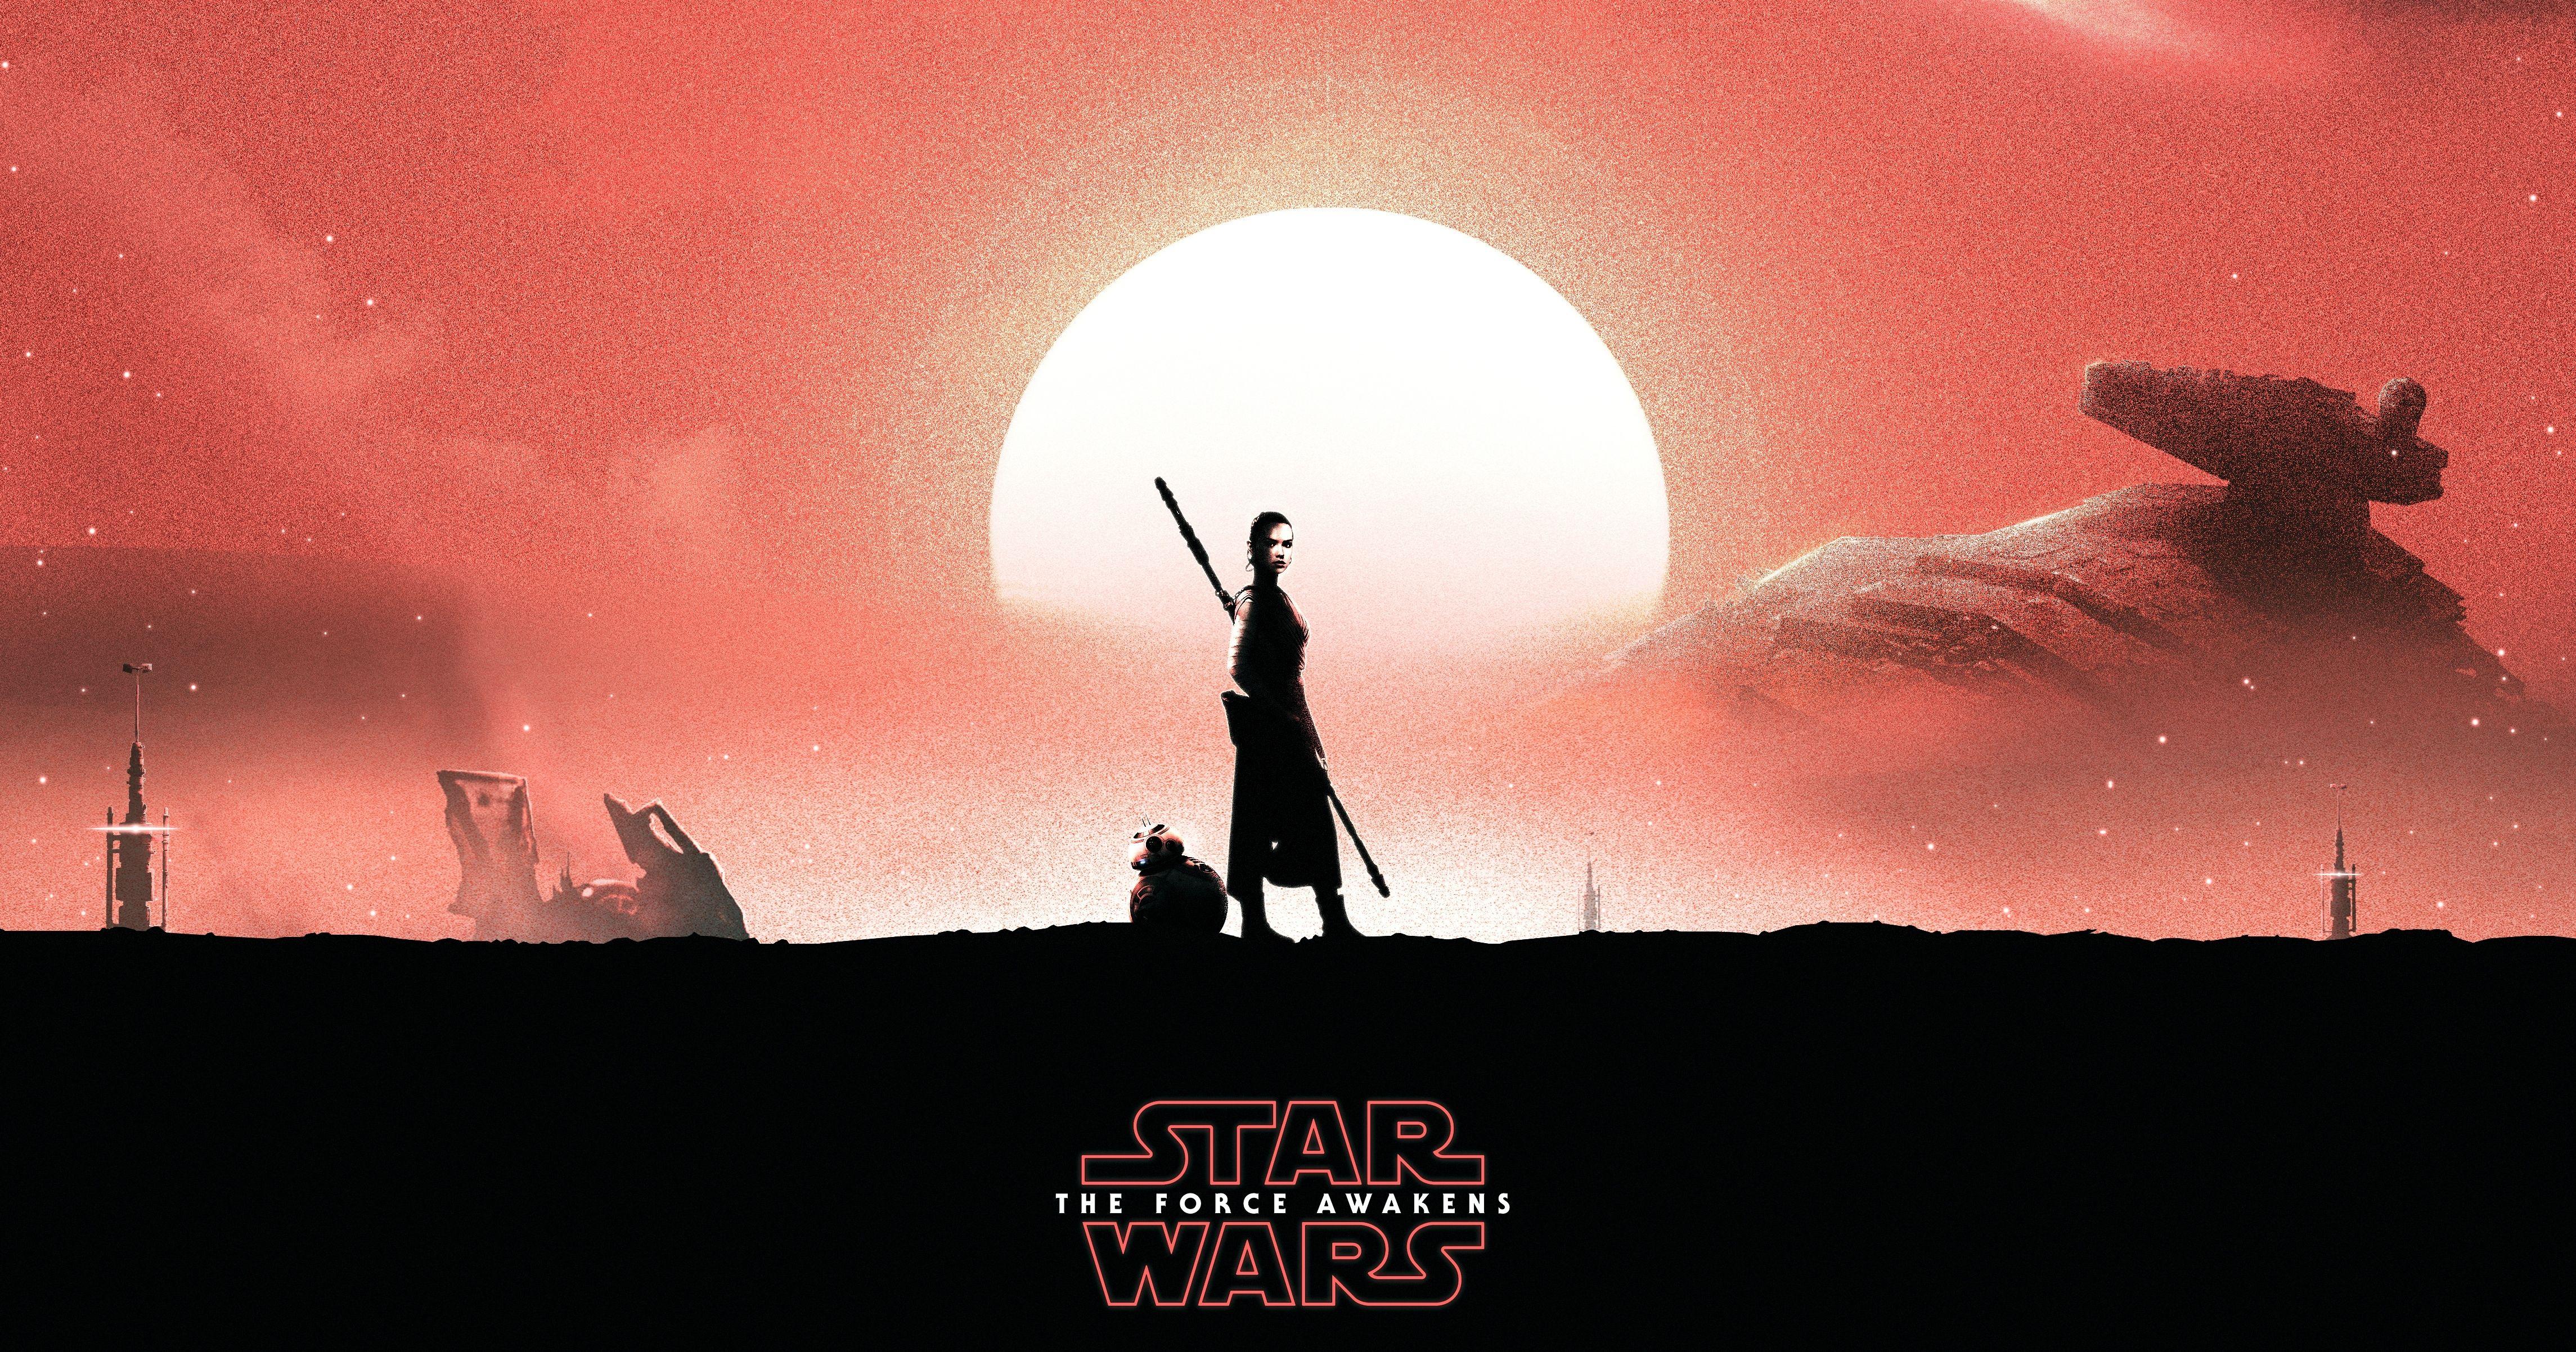 Star Wars Episode VII: The Force Awakens 4k Ultra HD Wallpaper